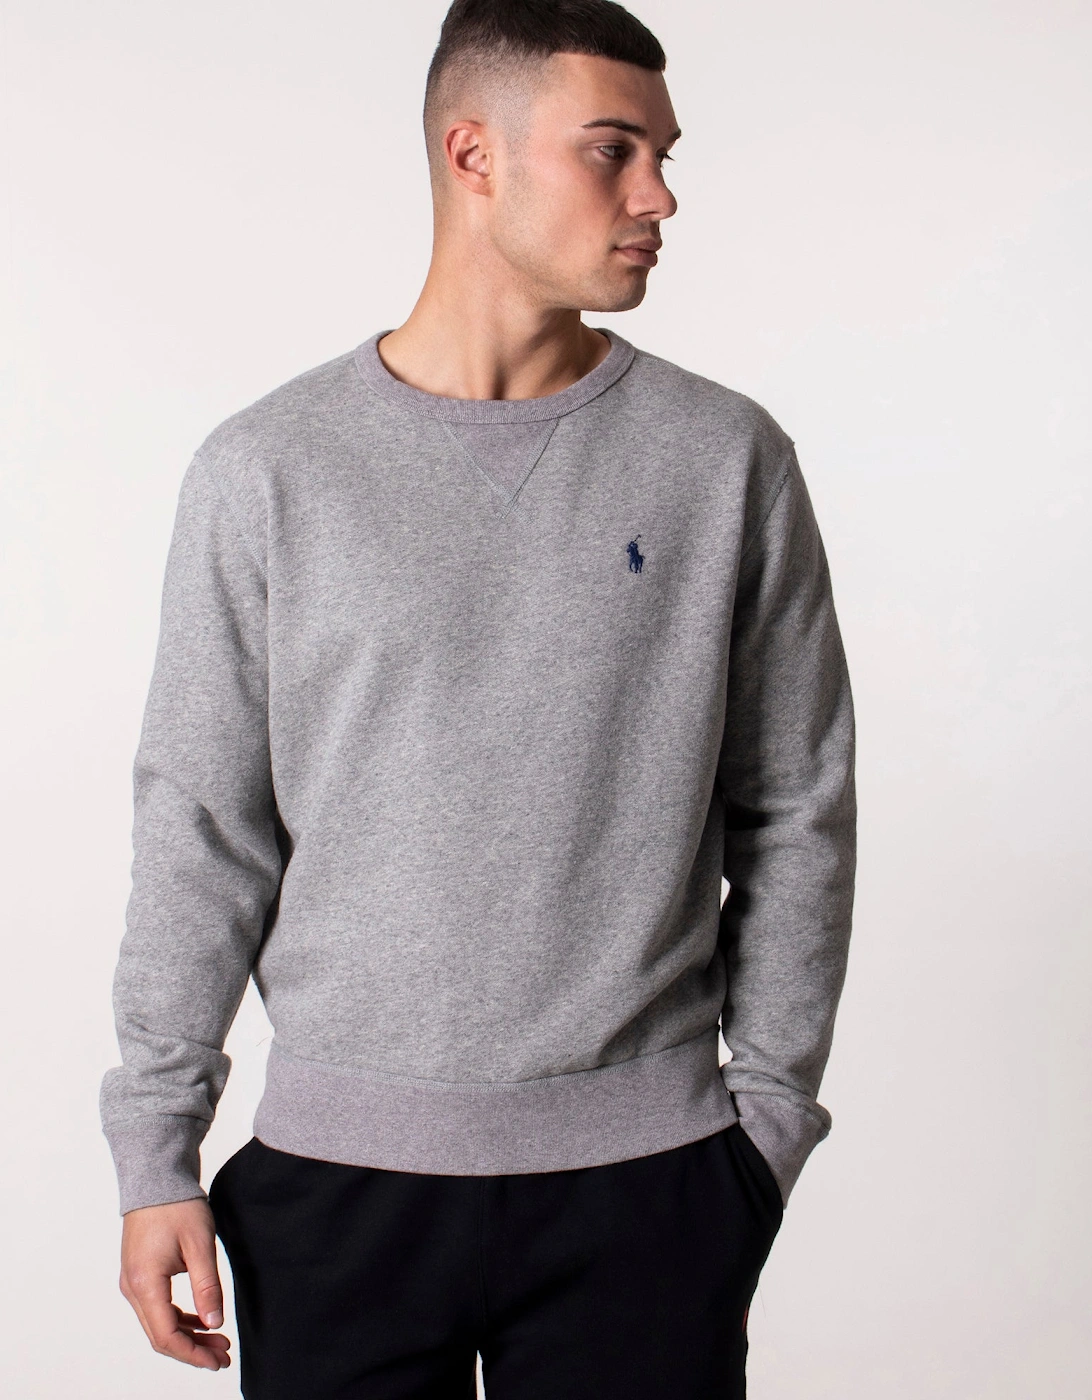 Relaxed Fit Garment-Dyed Fleece Sweatshirt